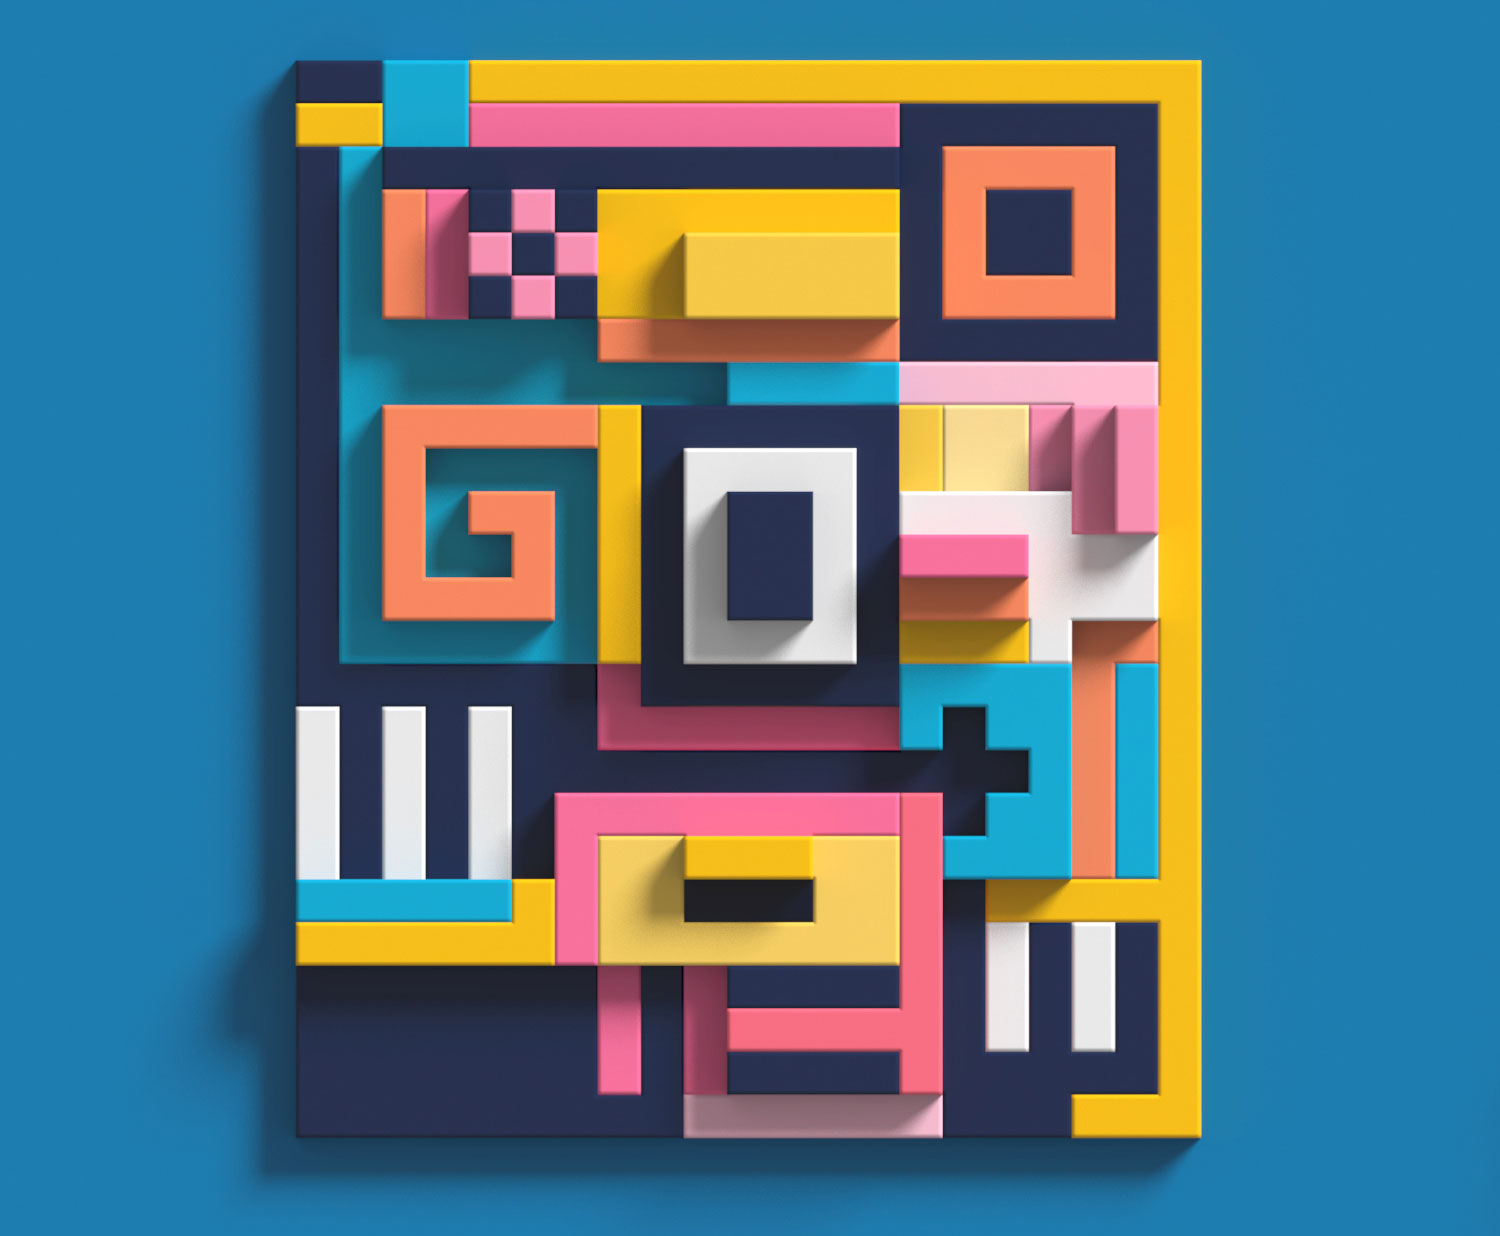 Pixel art: Abstract geometric design